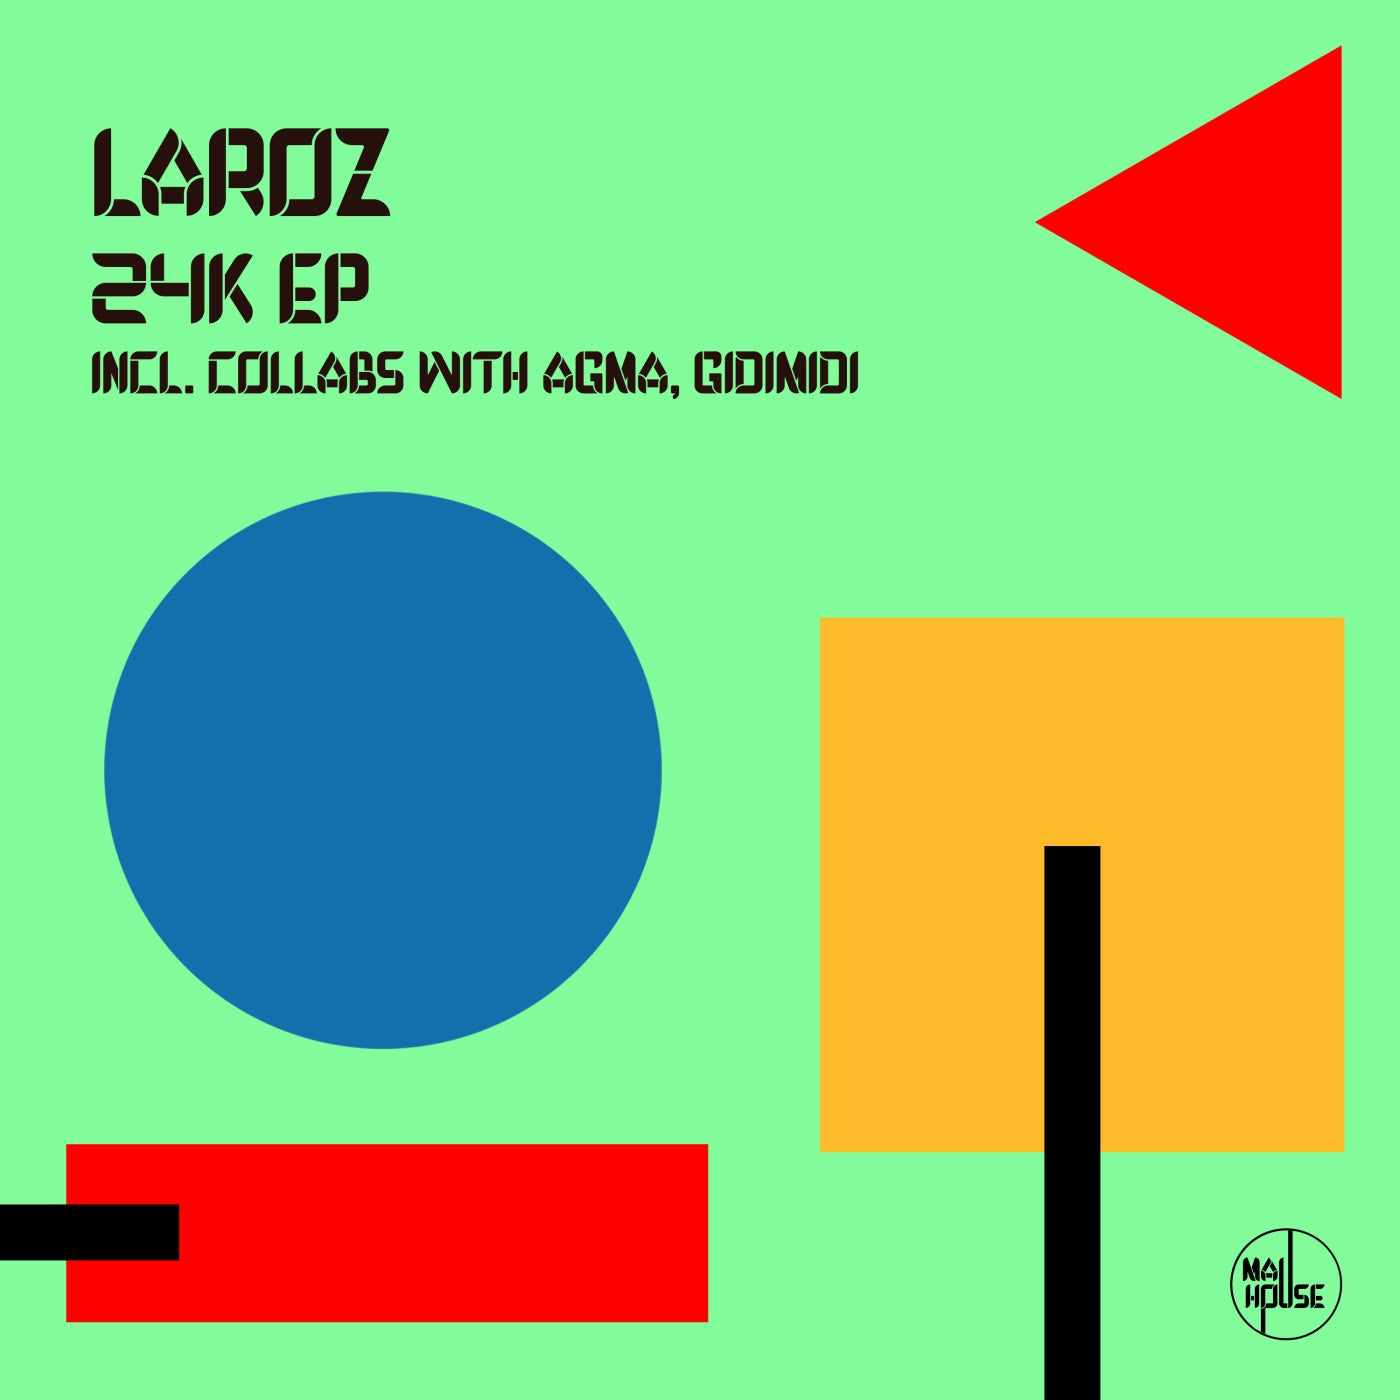 Laroz, Agma - 25K (Original Mix)